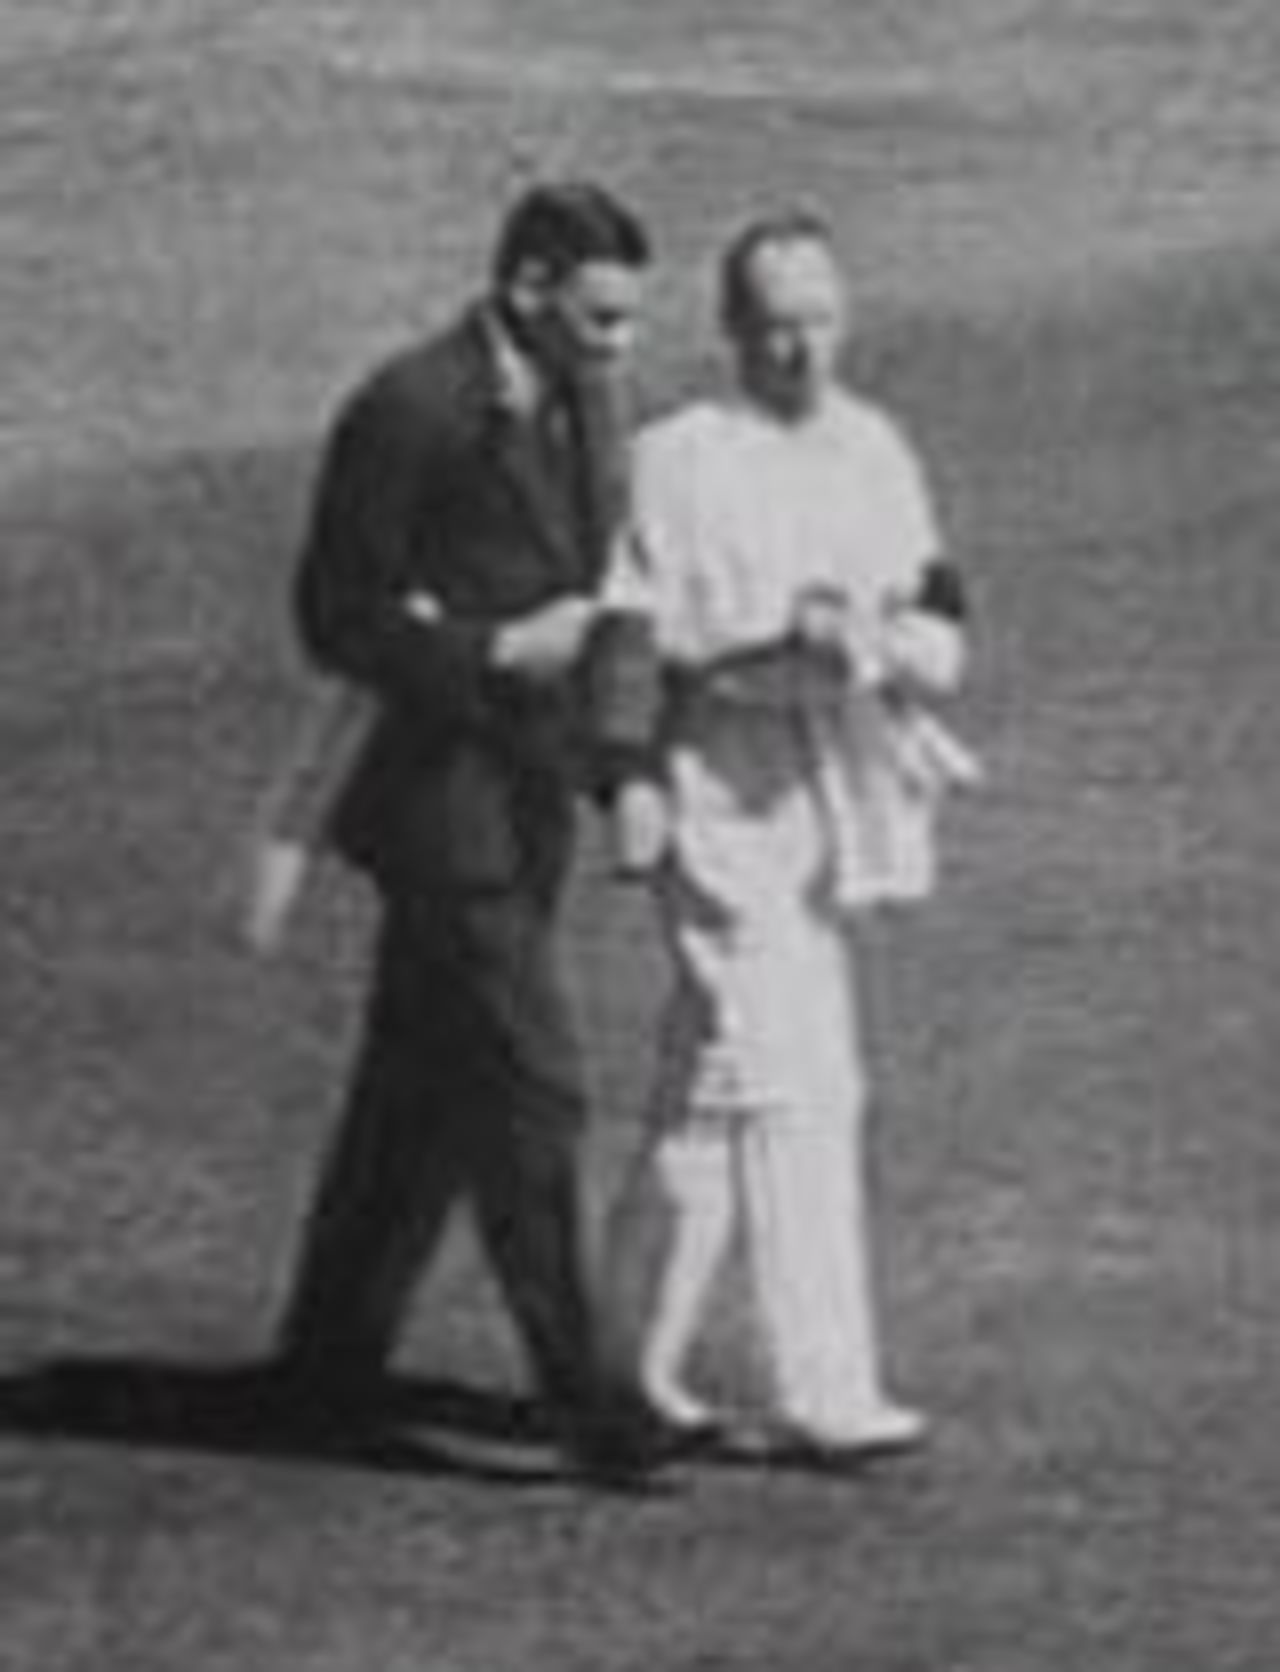 Bill Woodfull escorts Bert Oldfield off the field, Australia v England, 3rd Test, Adelaide, January 16, 1933